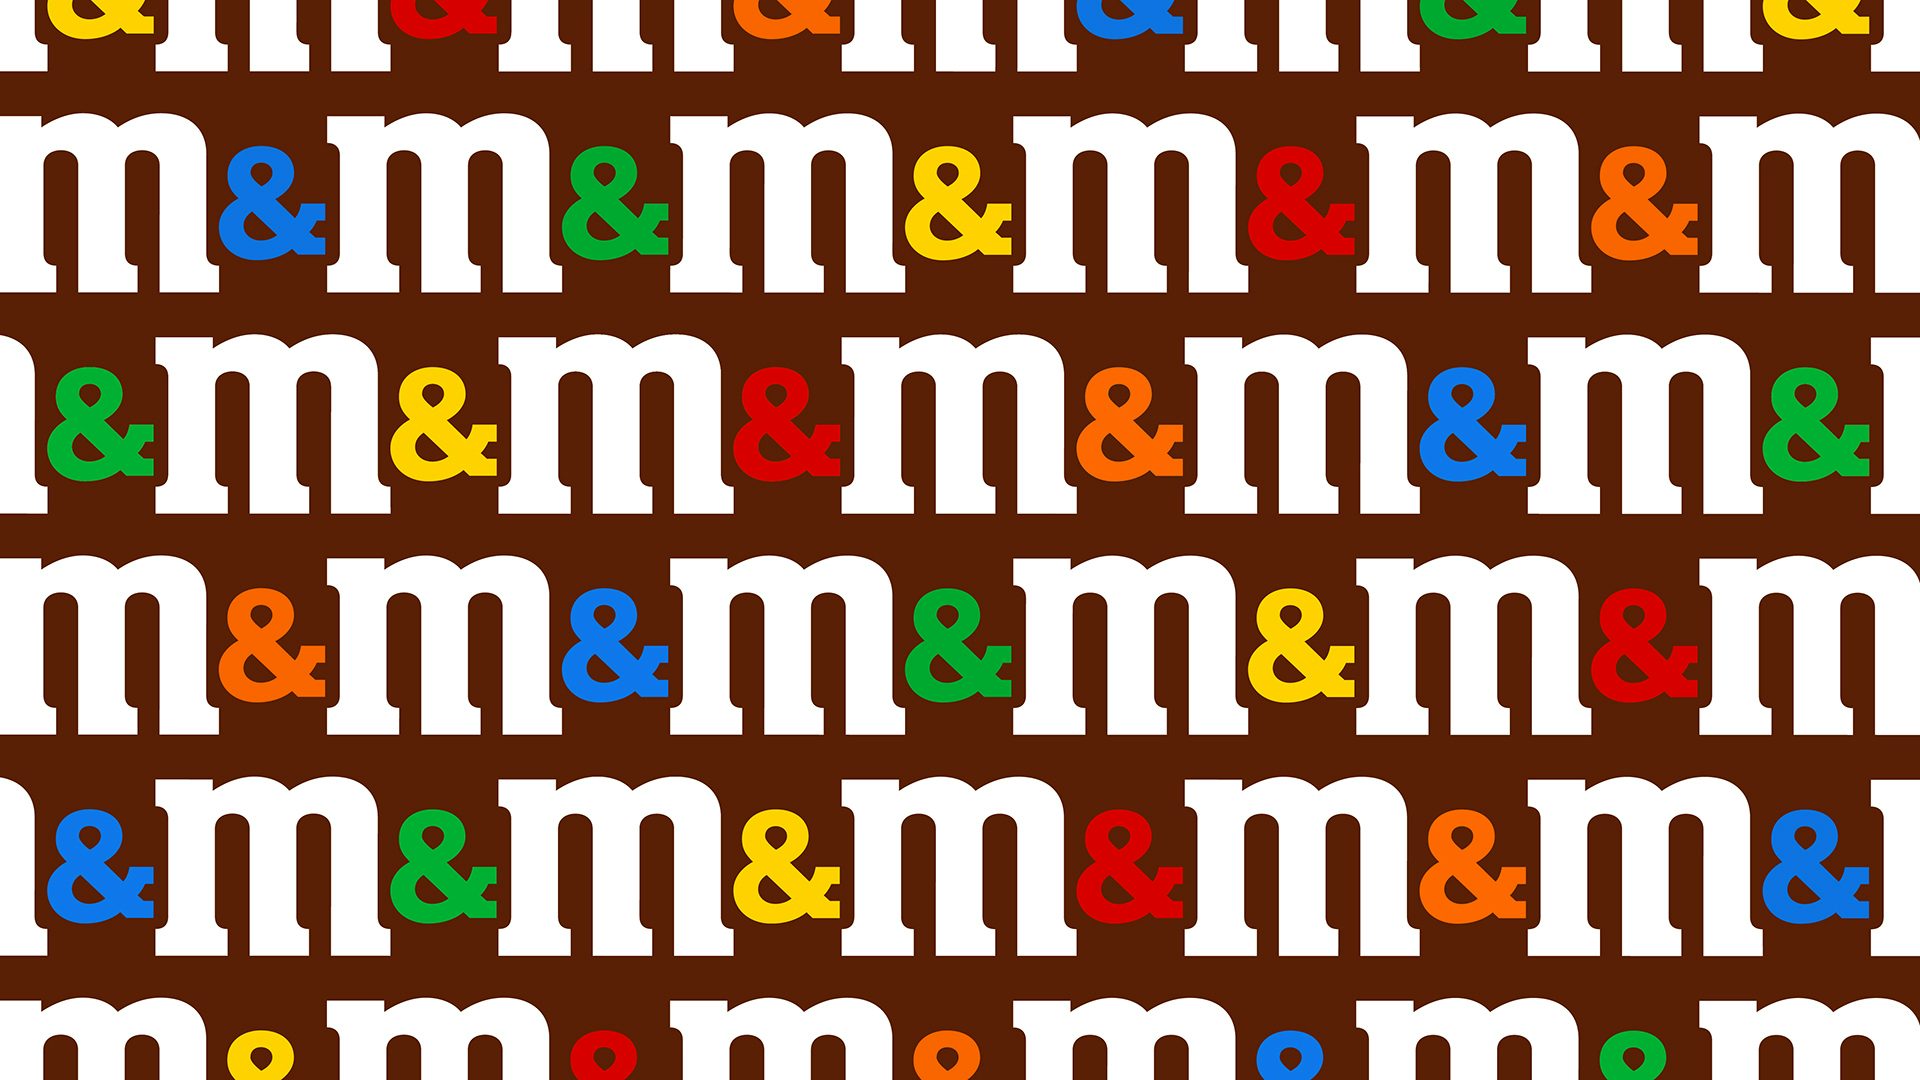 M&M's reveals global redesign alongside new brand purpose